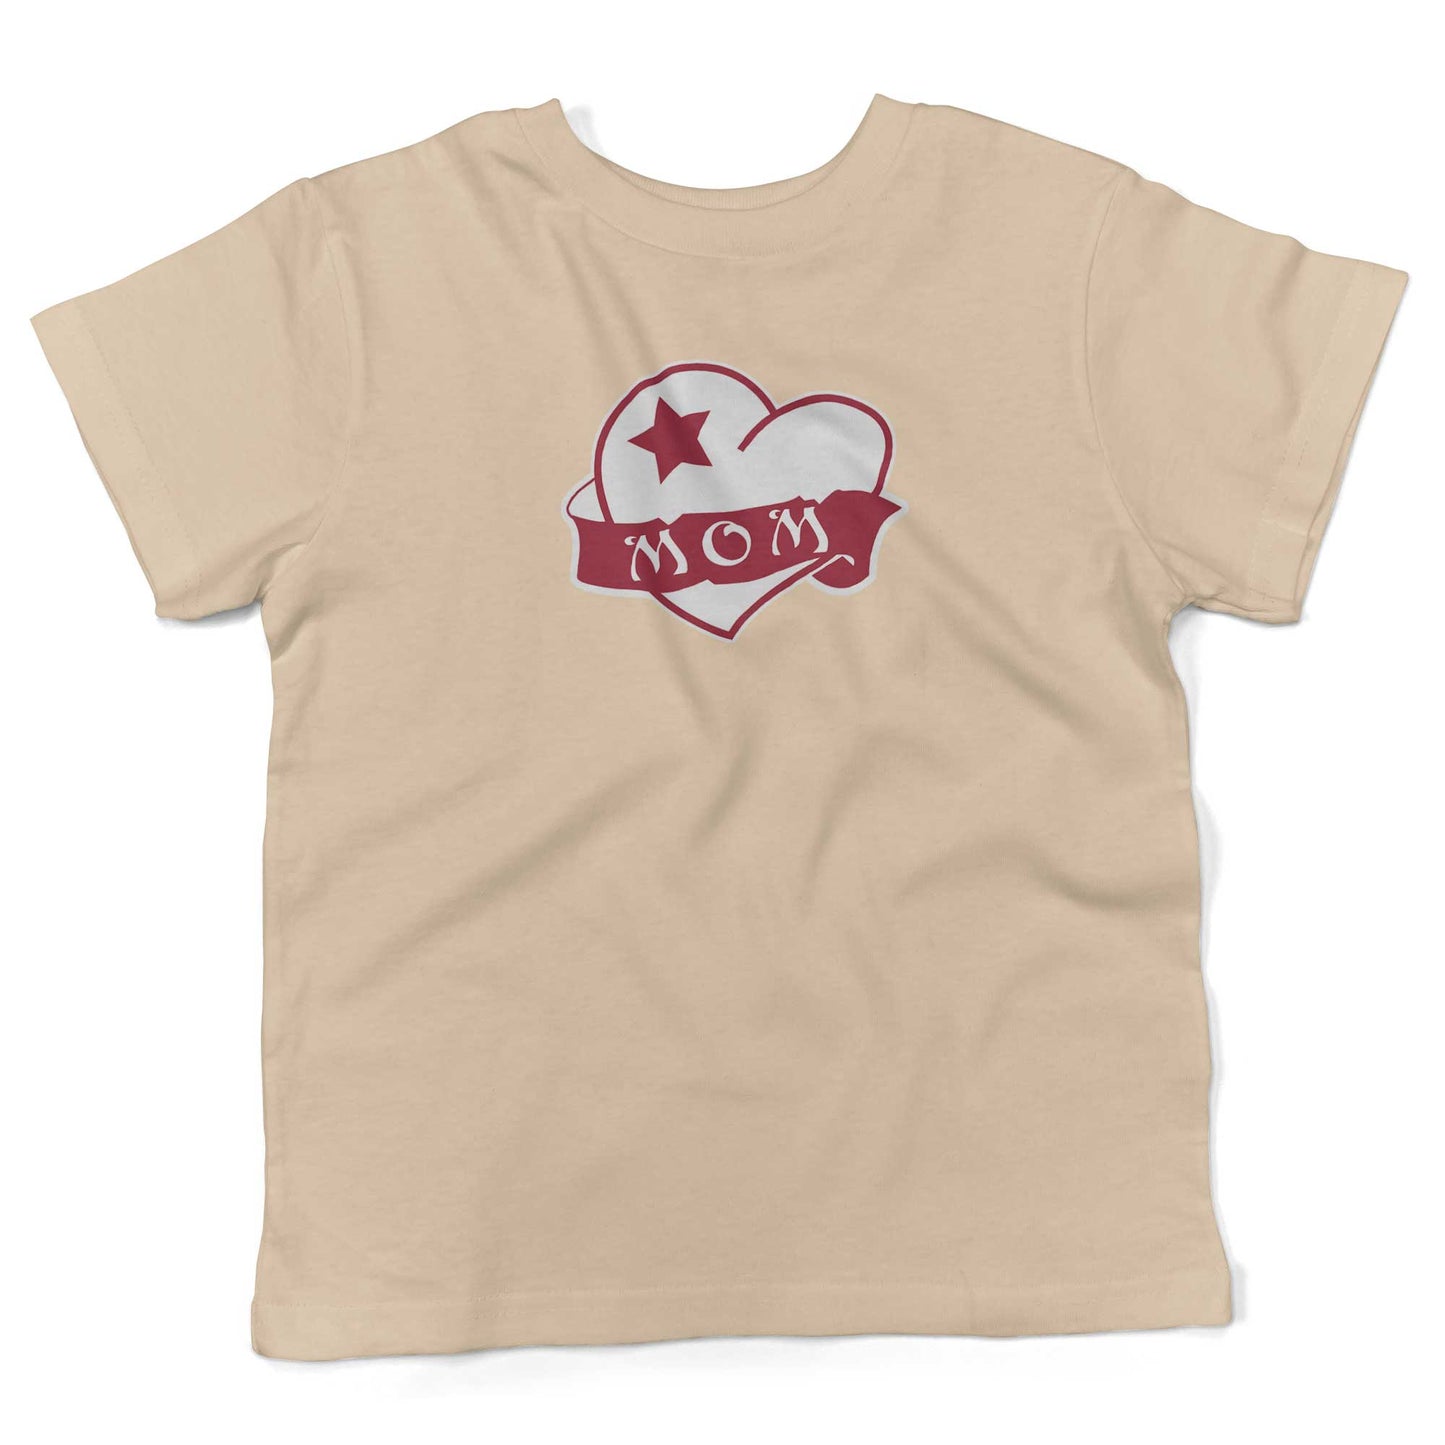 Mom Tattoo Heart Toddler Shirt-Organic Natural-2T